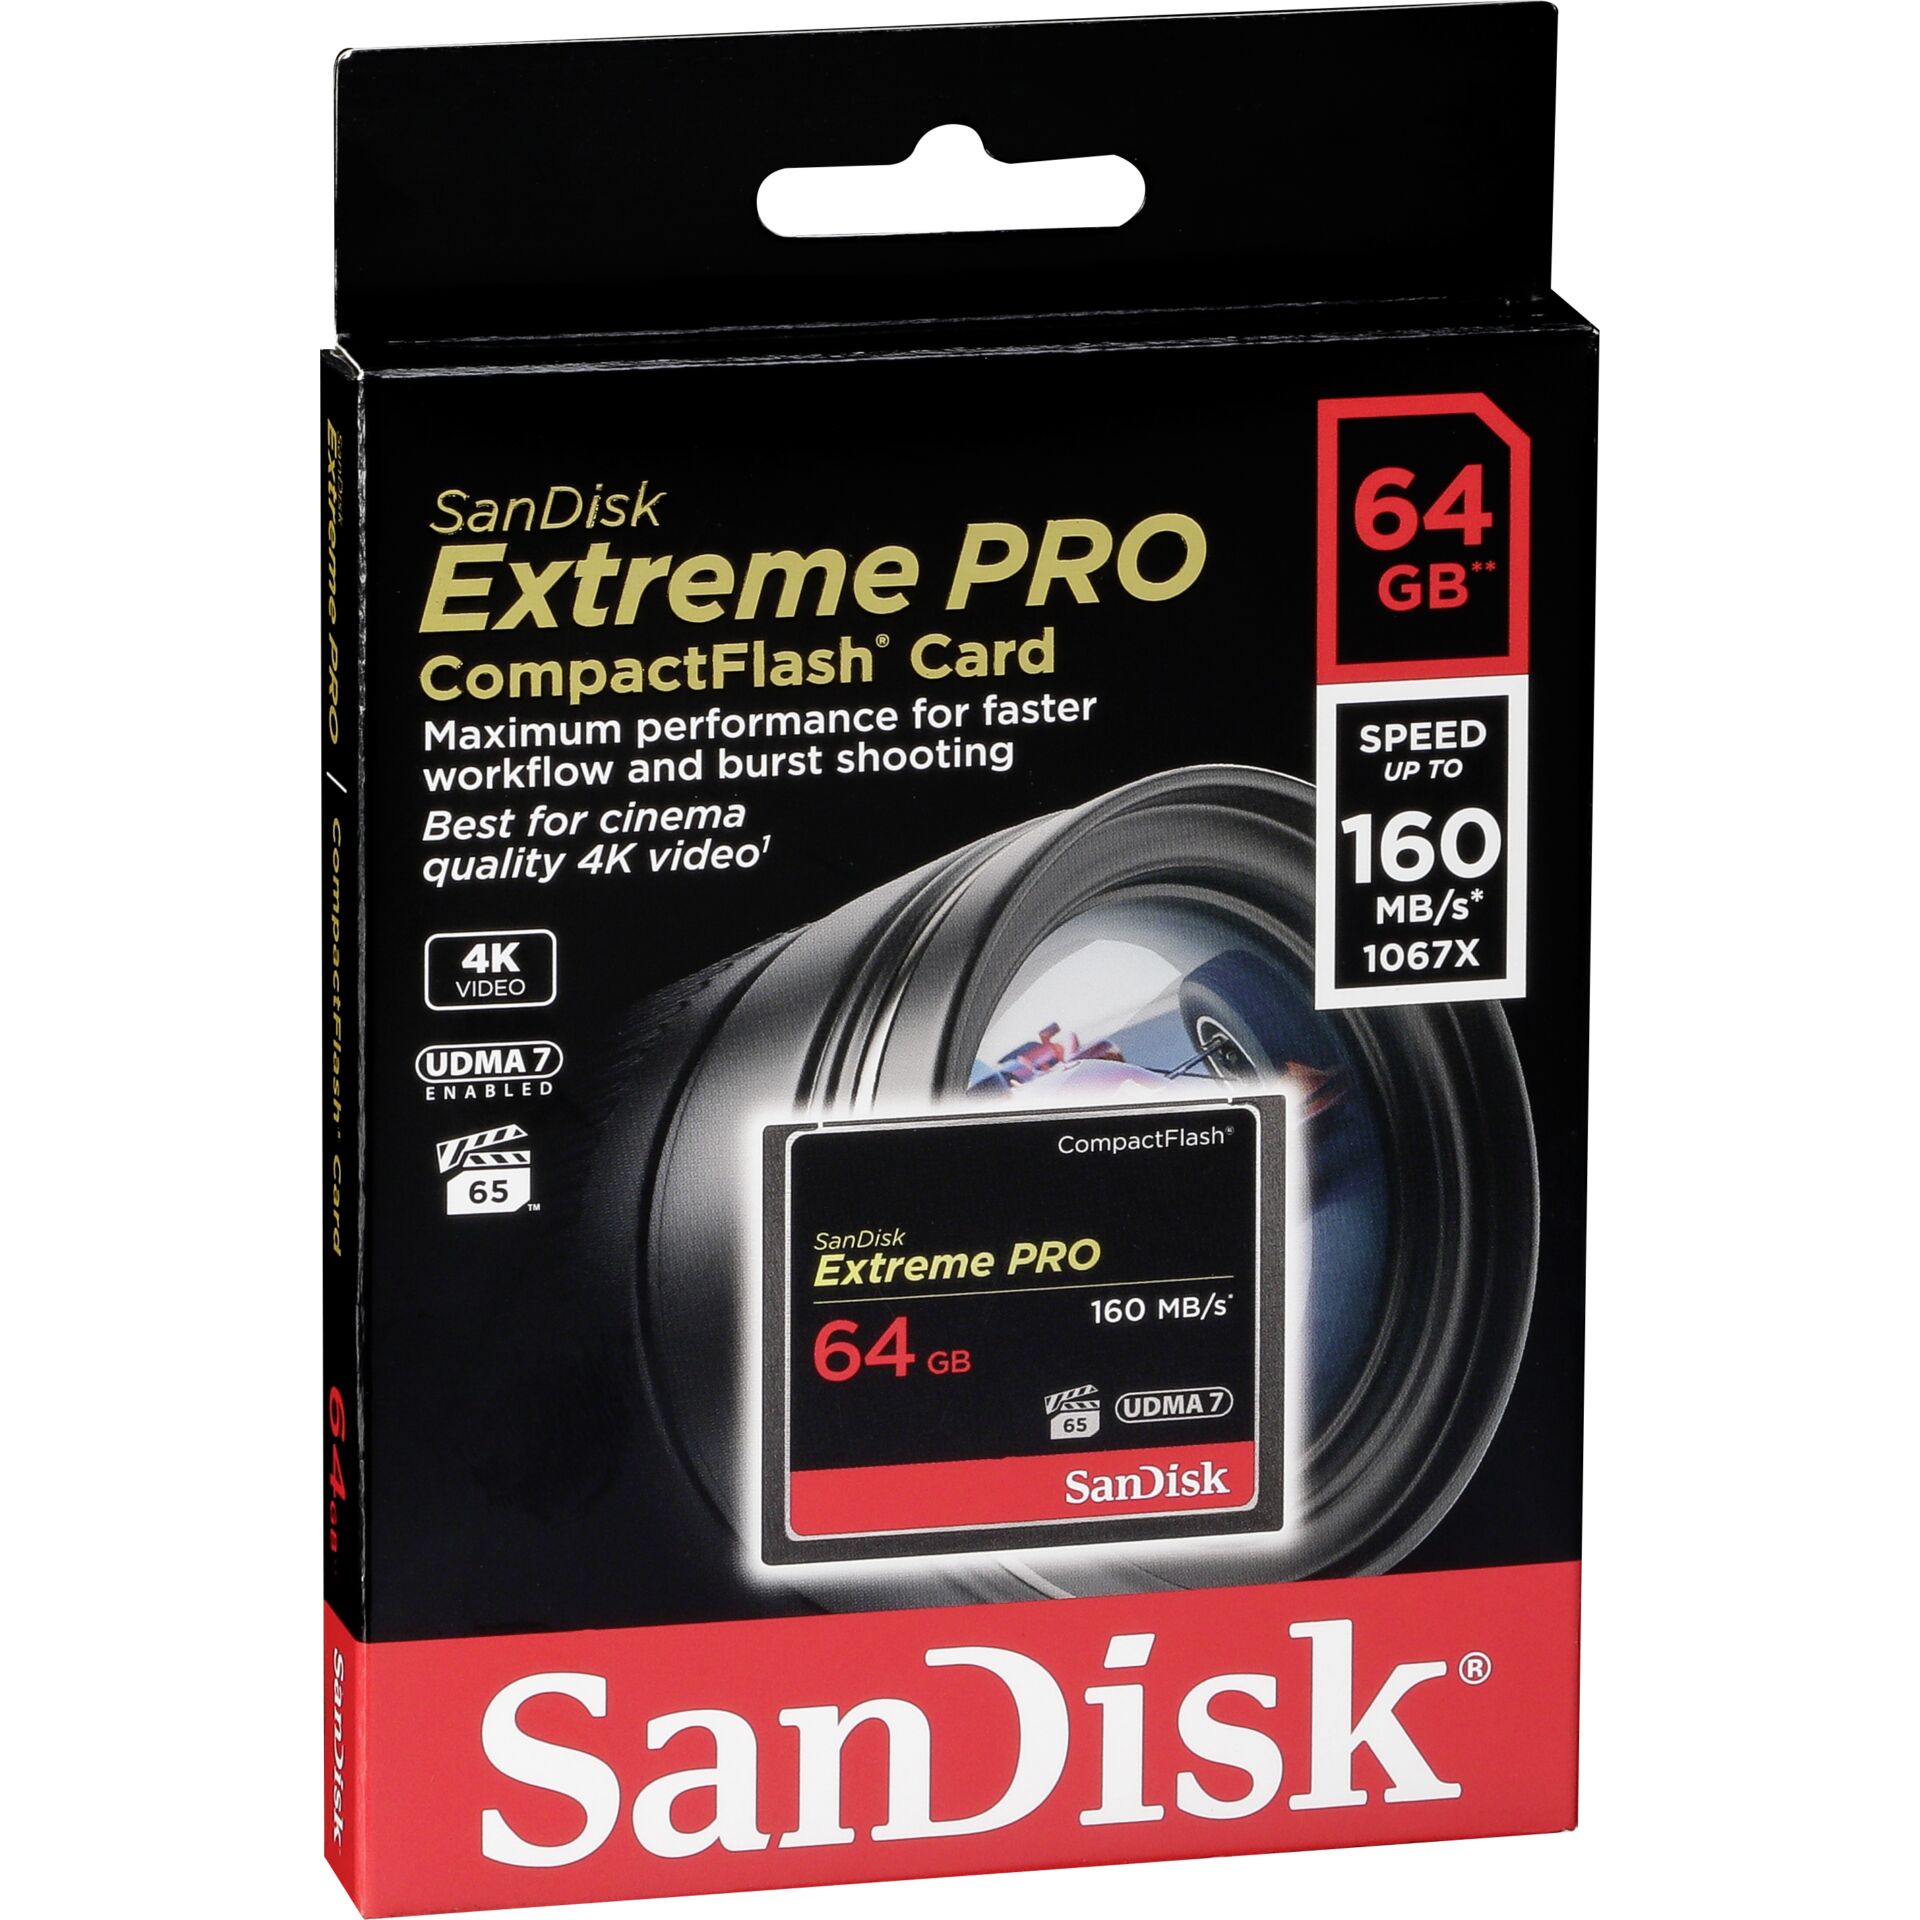 CompactFlash 64GB SanDisk Extreme Pro, 160MB/s 